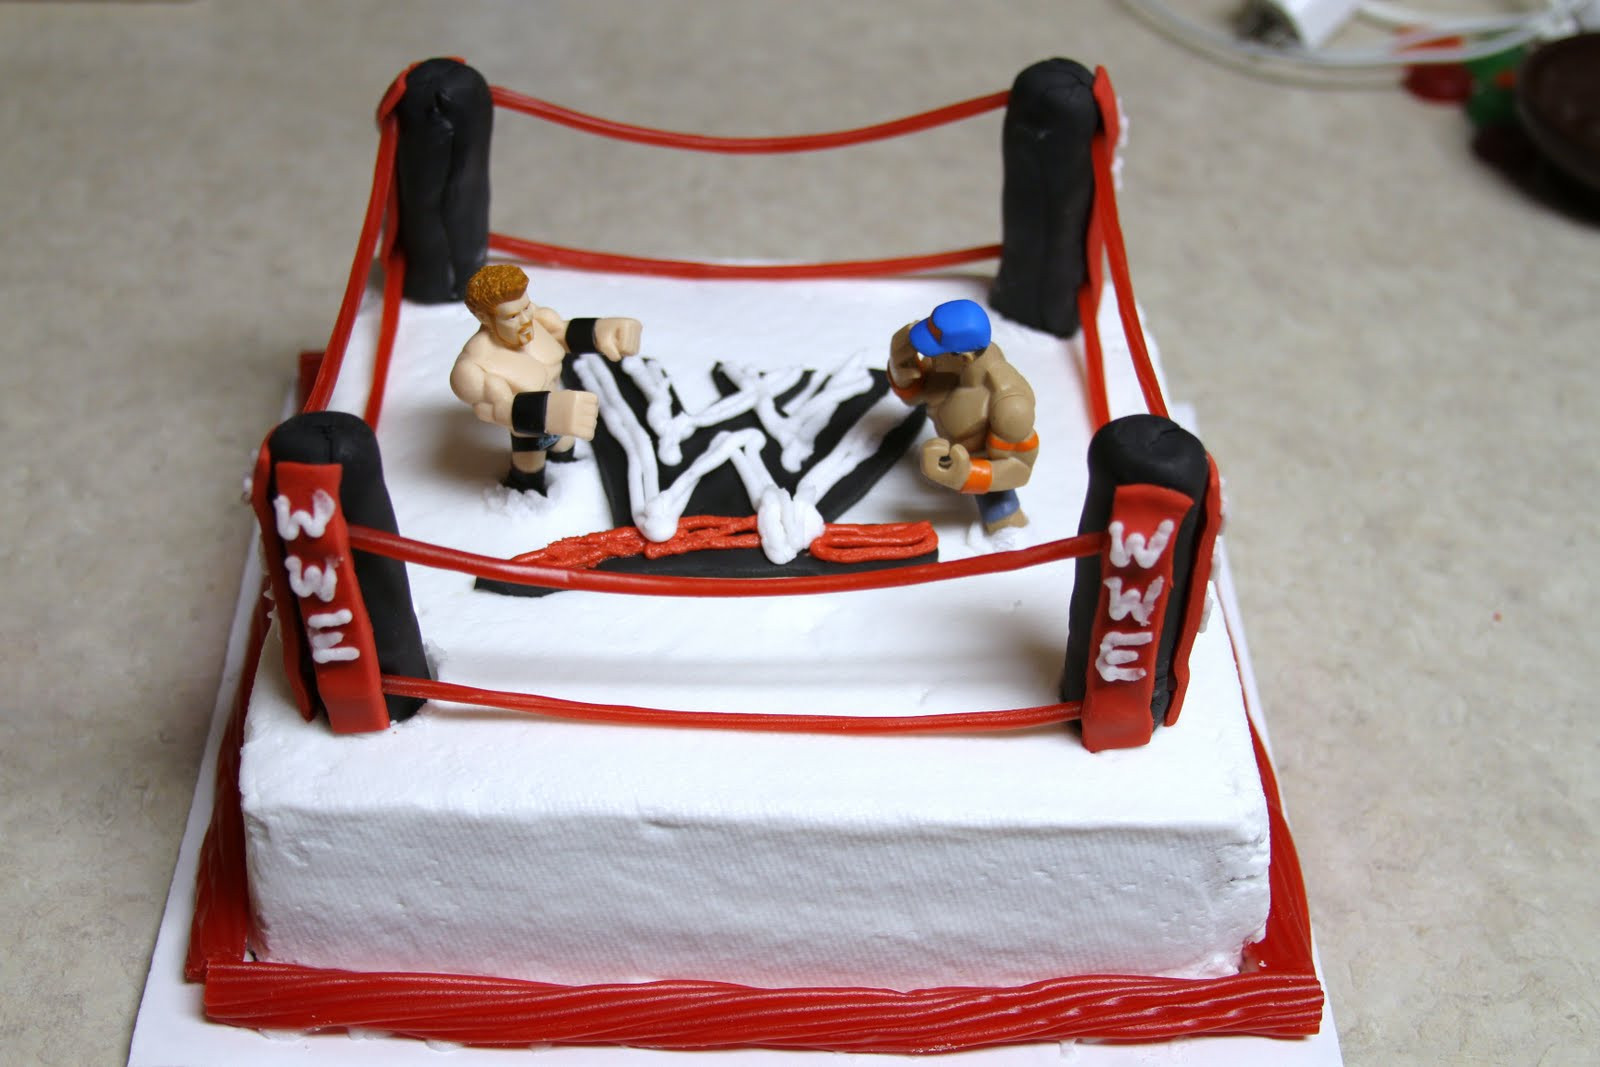 Wwe Birthday Cakes
 Michele Robinson Cakes WWE Cake